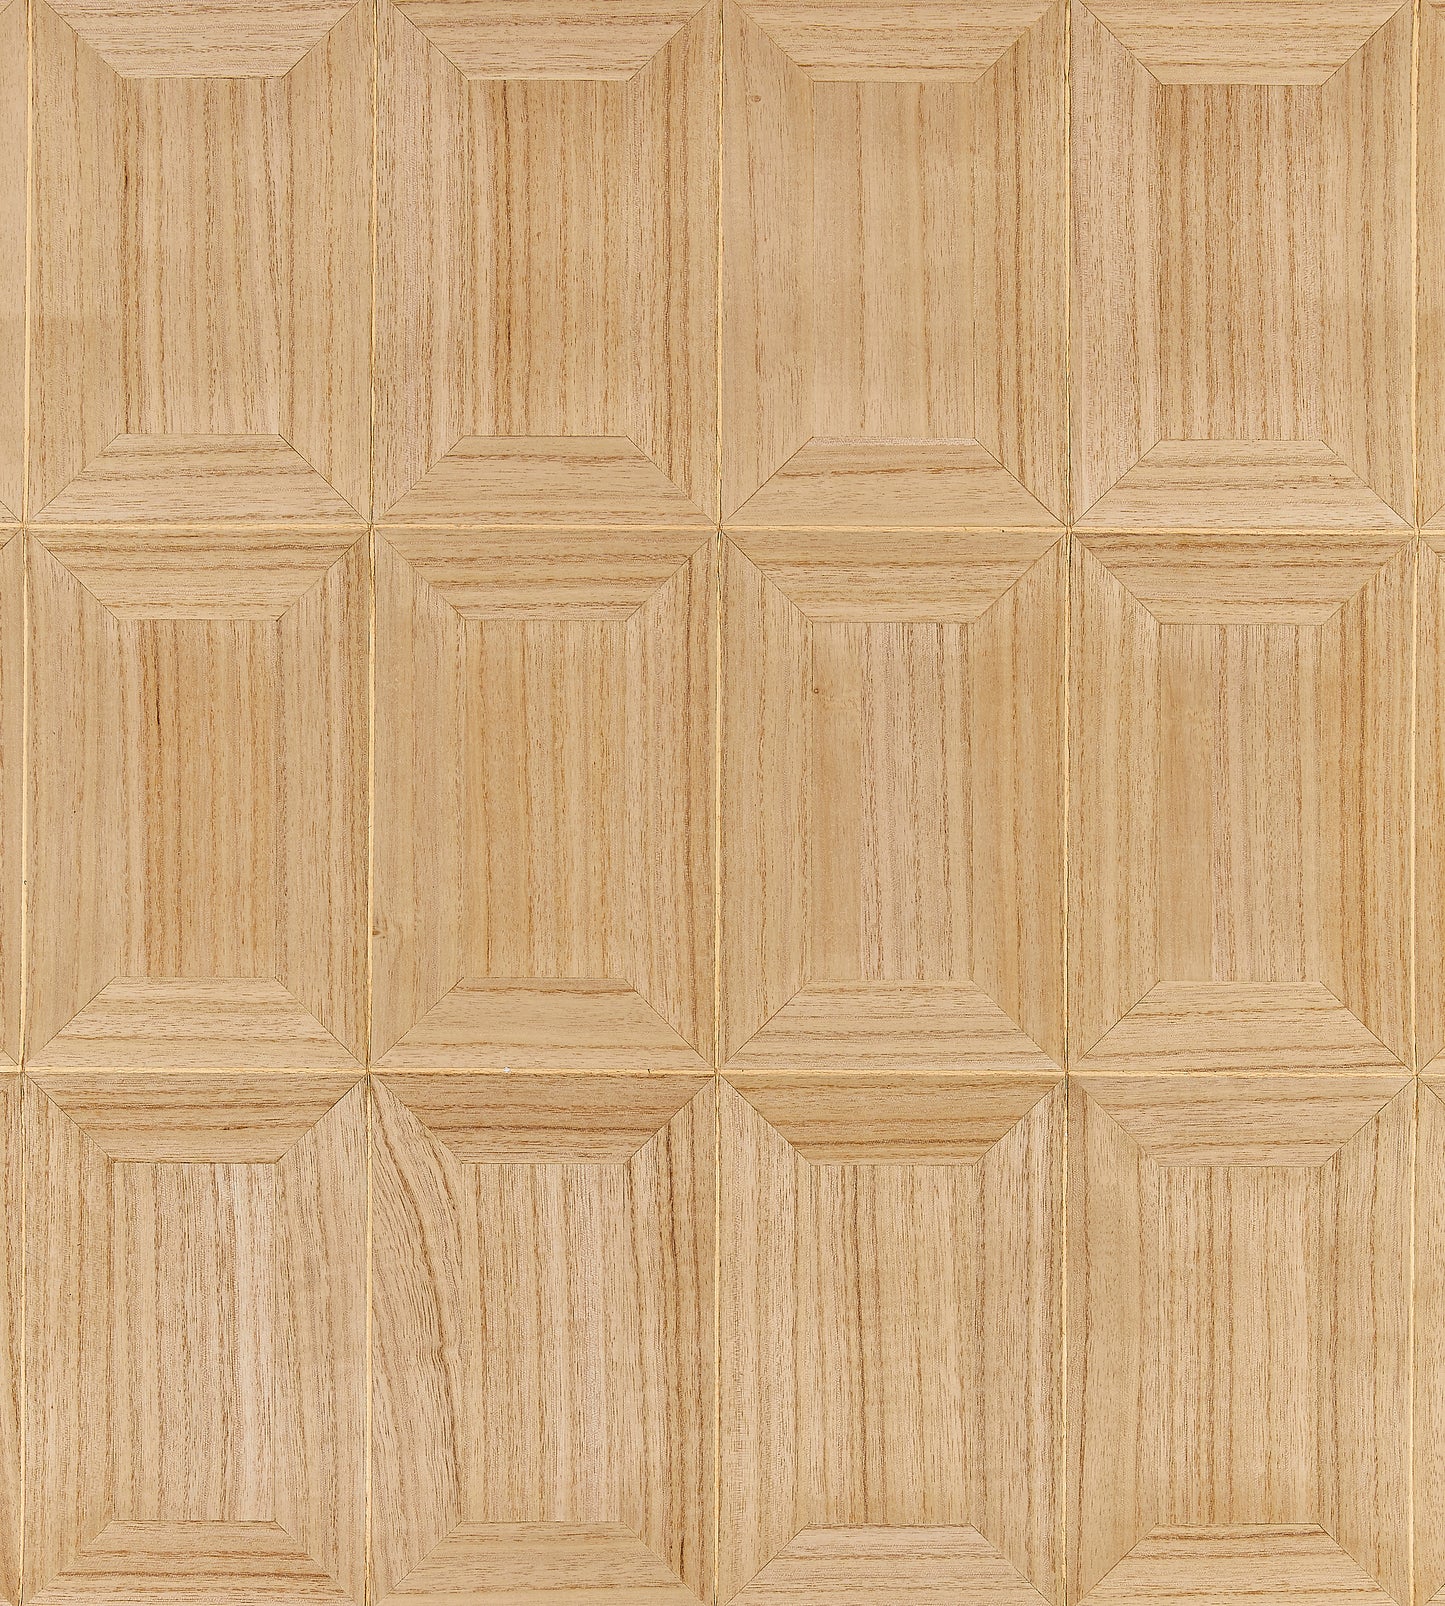 Acquire Scalamandre Wallpaper Pattern Sc 0001Wp88475 Name Libro - Wood Maple Geometric|Plaid Wallpaper